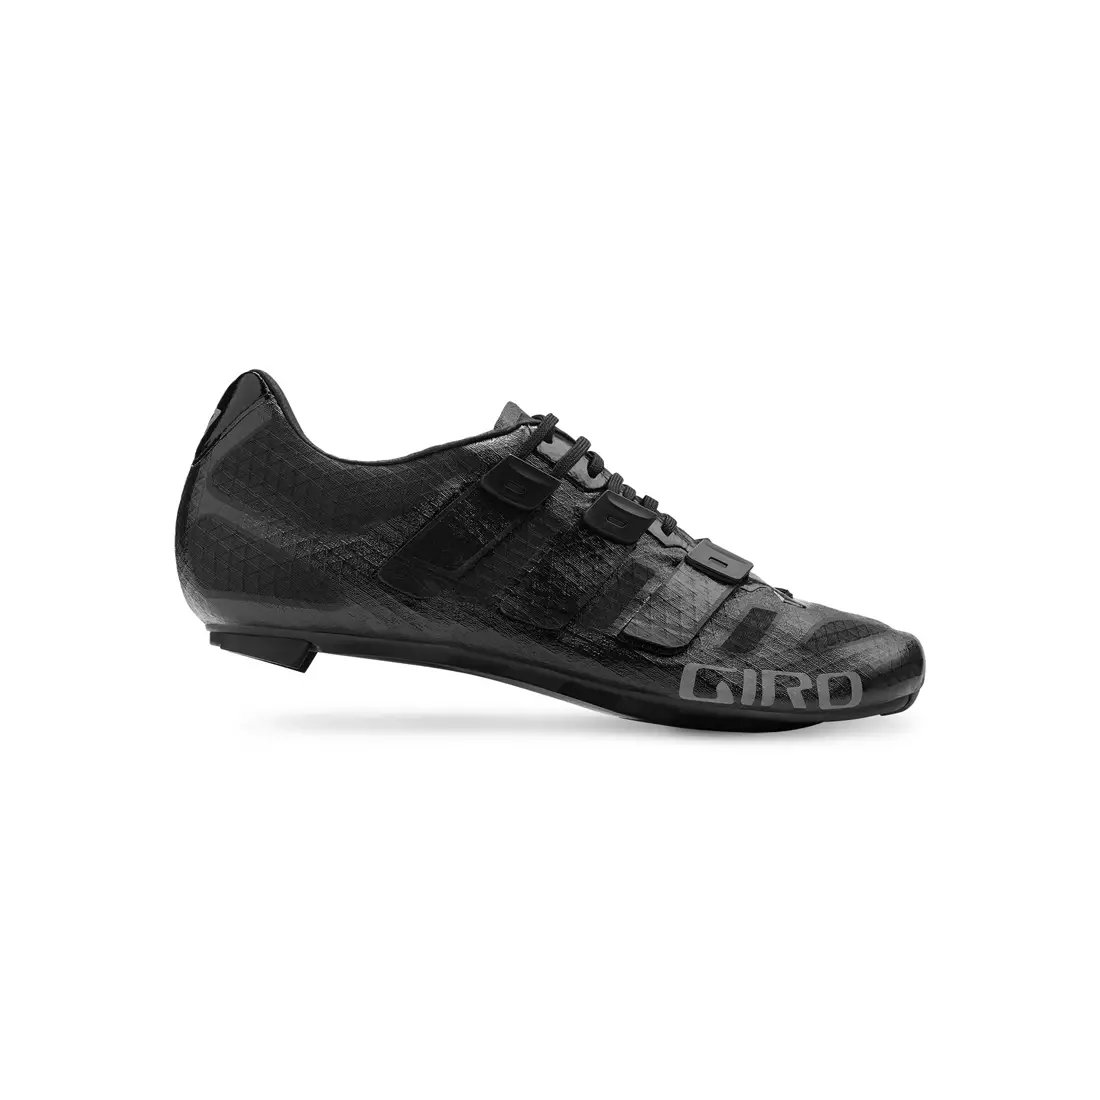 Men's bicycle boots  GIRO PROLIGHT TECHLACE black 